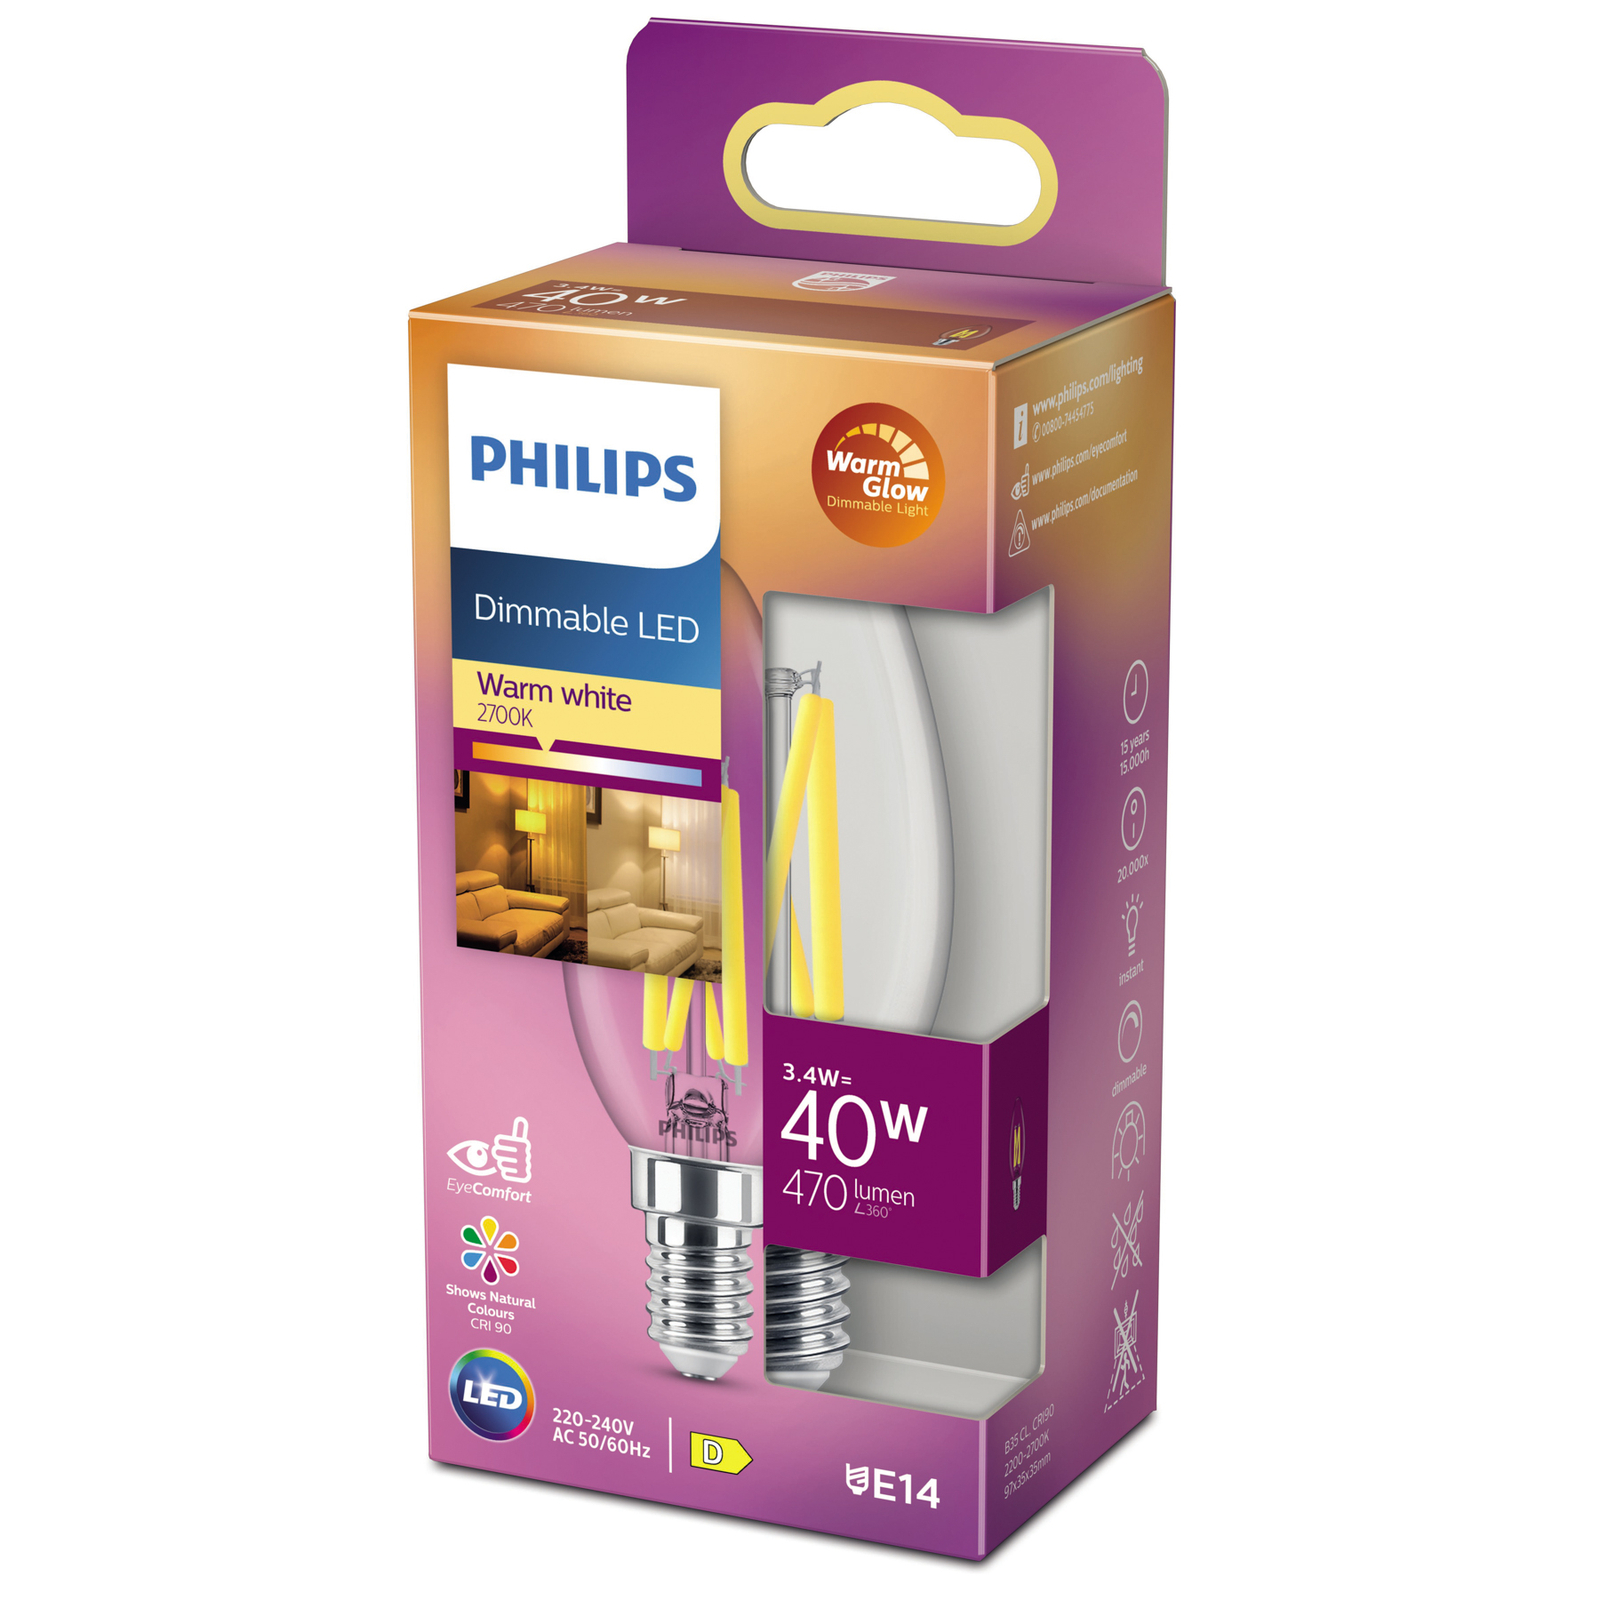 Philips Ampoule LED, E14 B35, 3,4 W, 2 700 K, WarmGlow